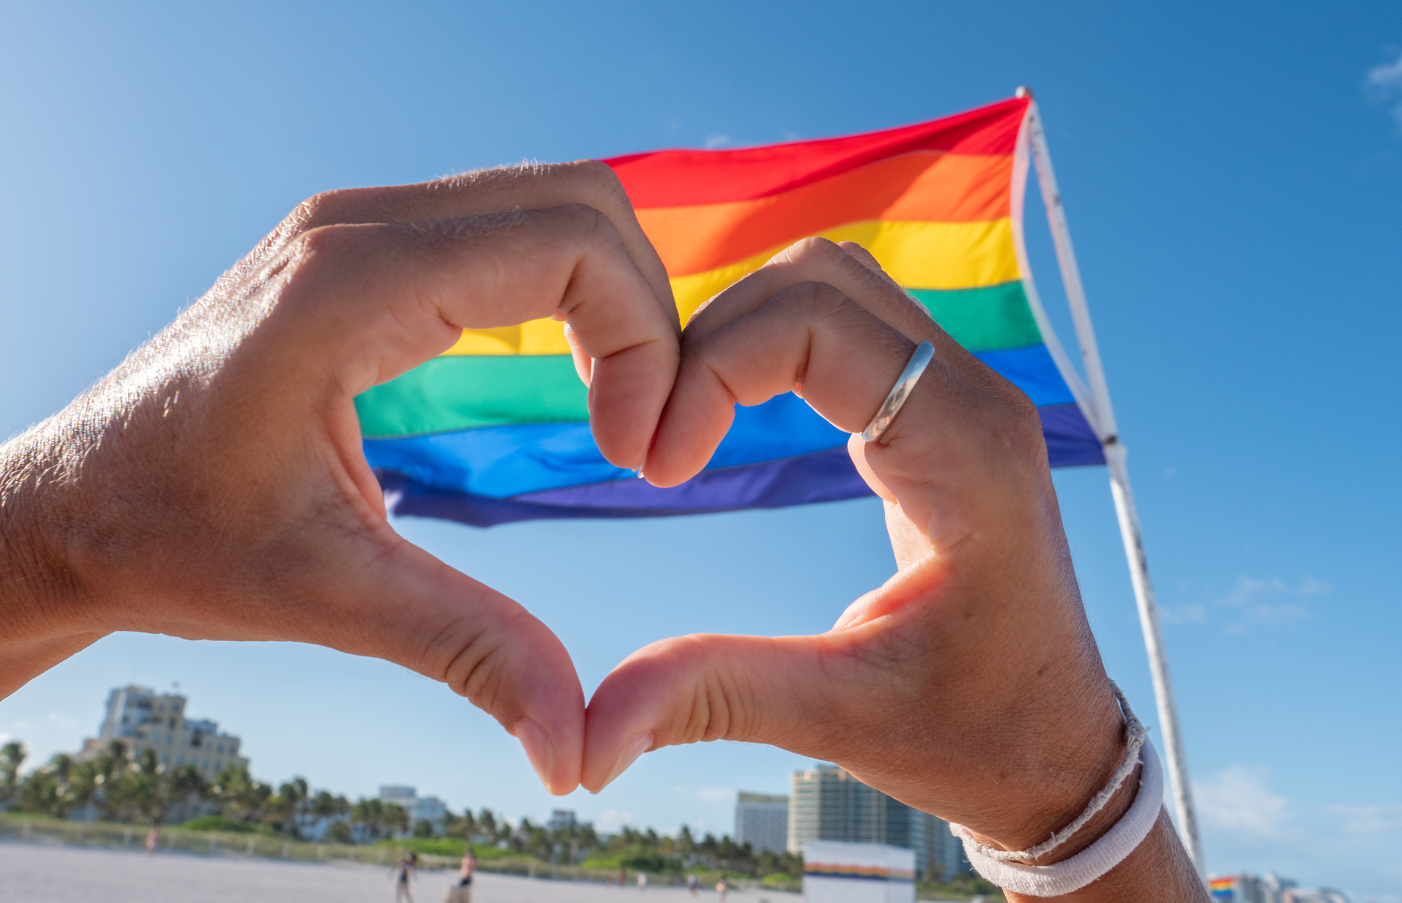 Miami: Tujuan LGBTQ+